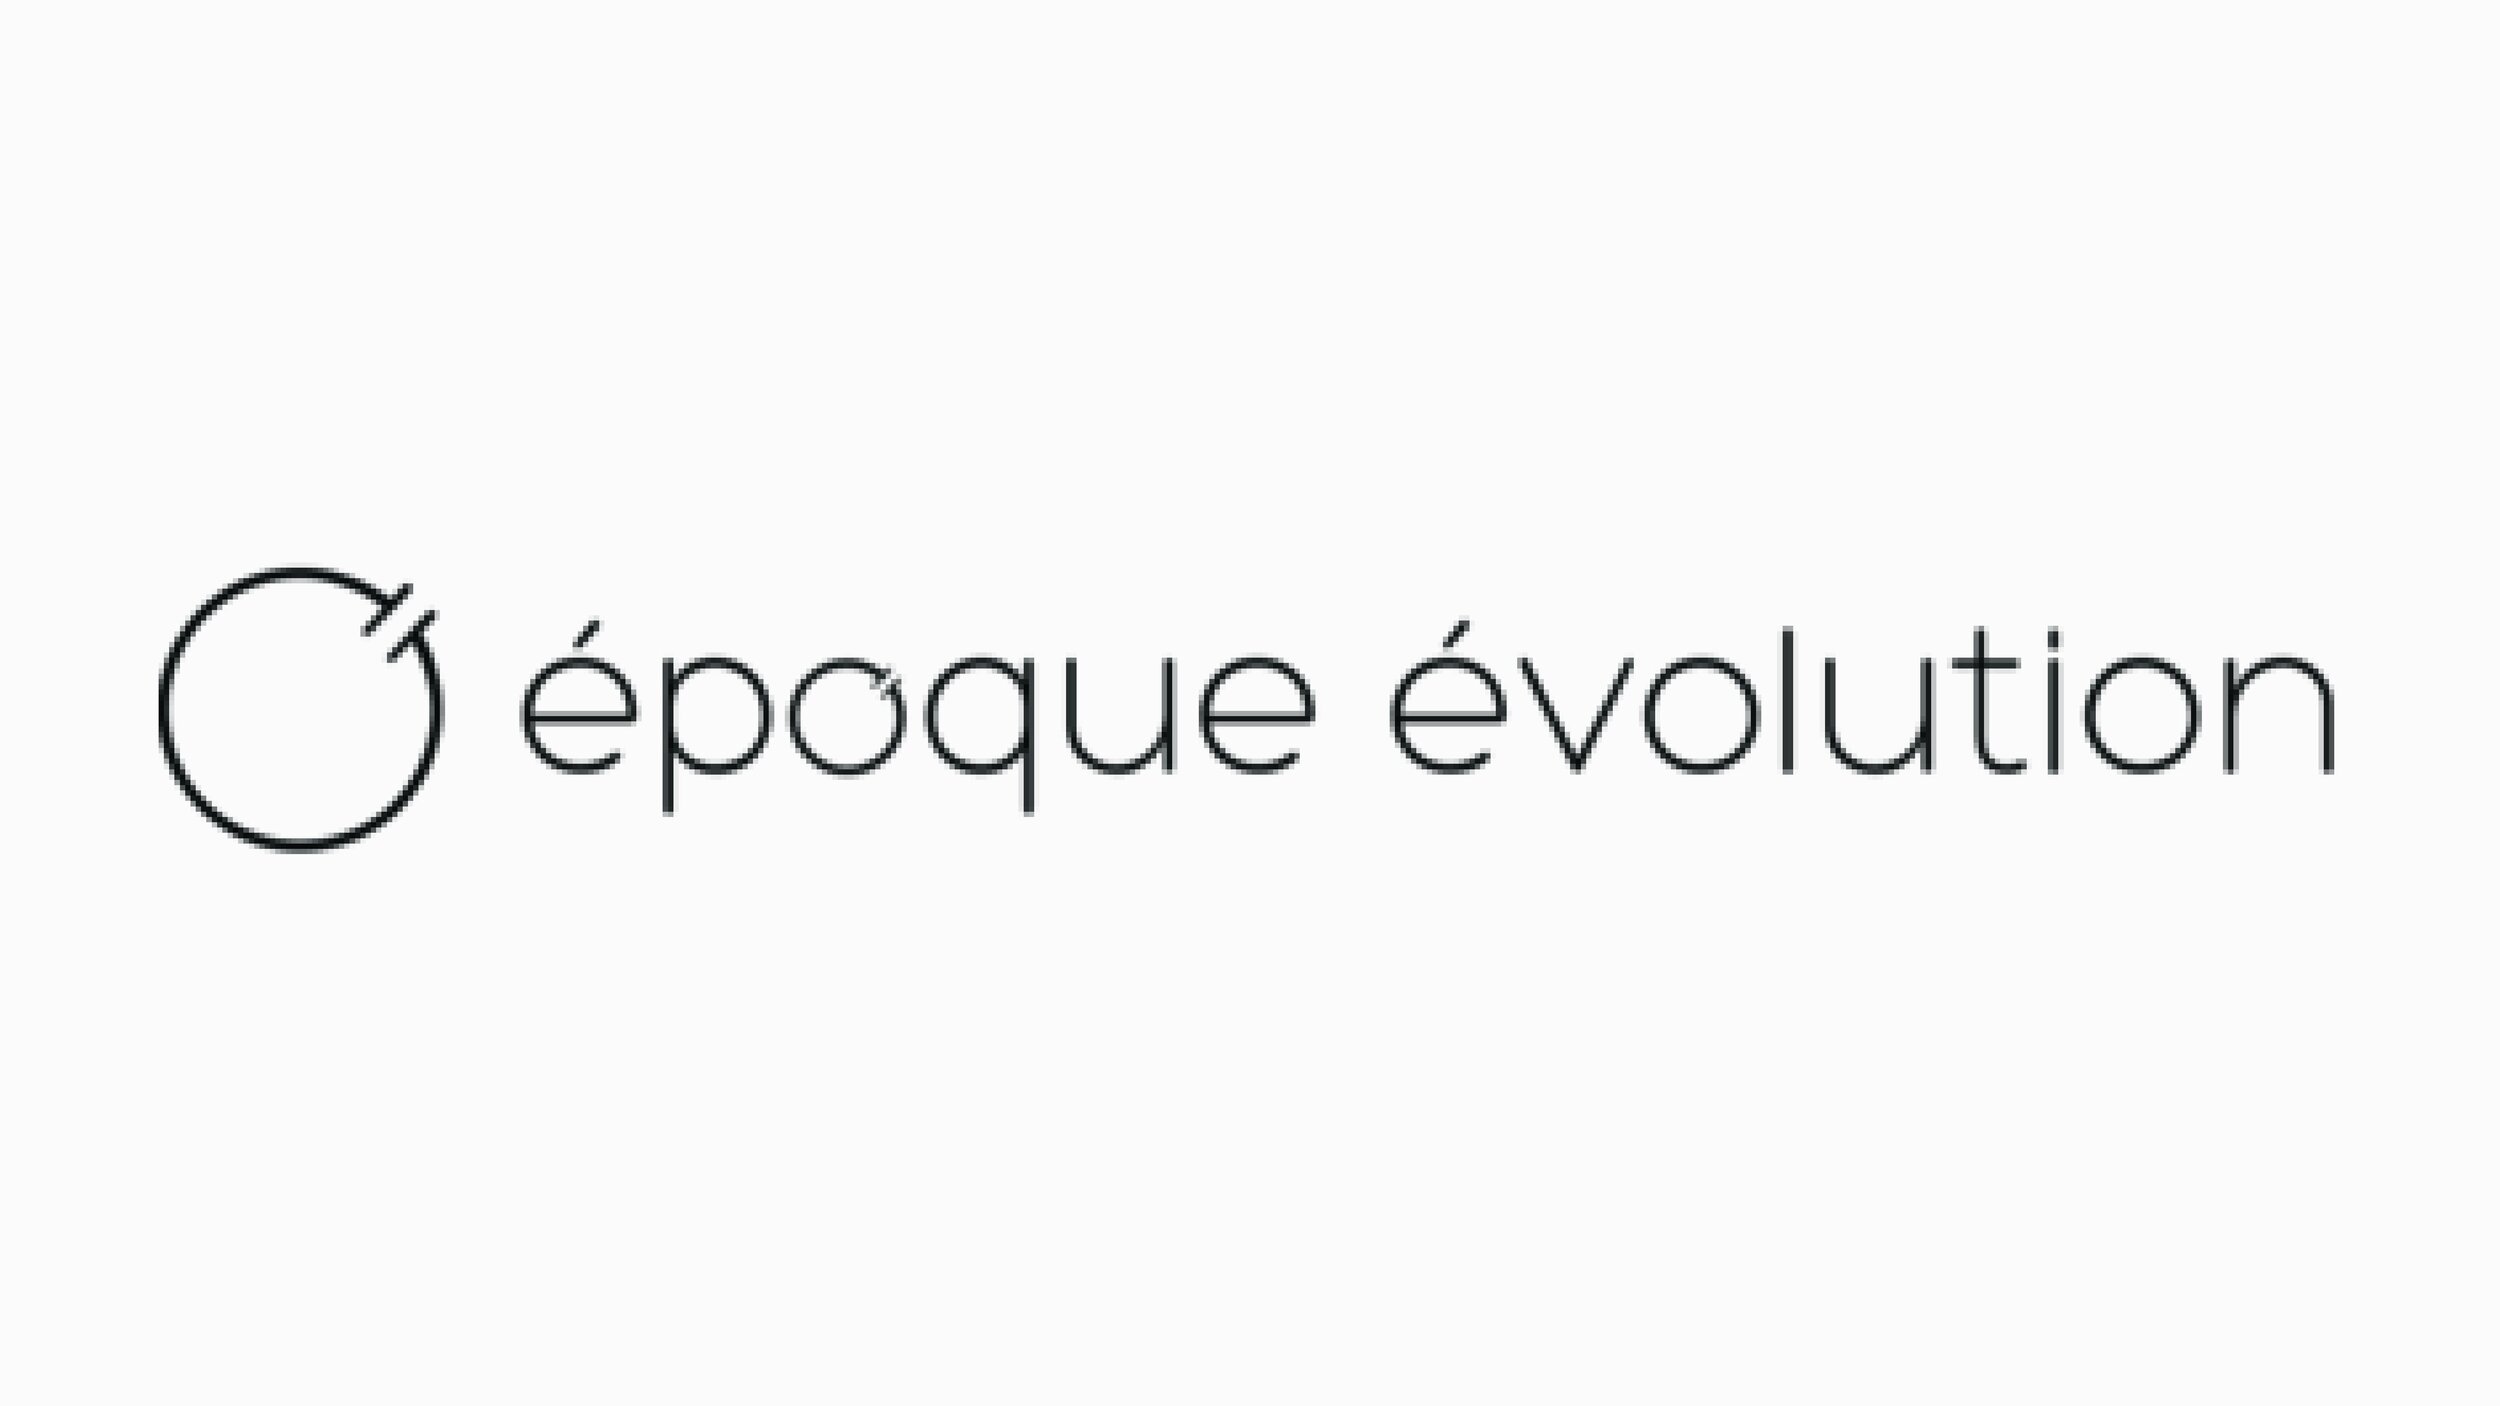 epoque evolution logo - white background.jpg